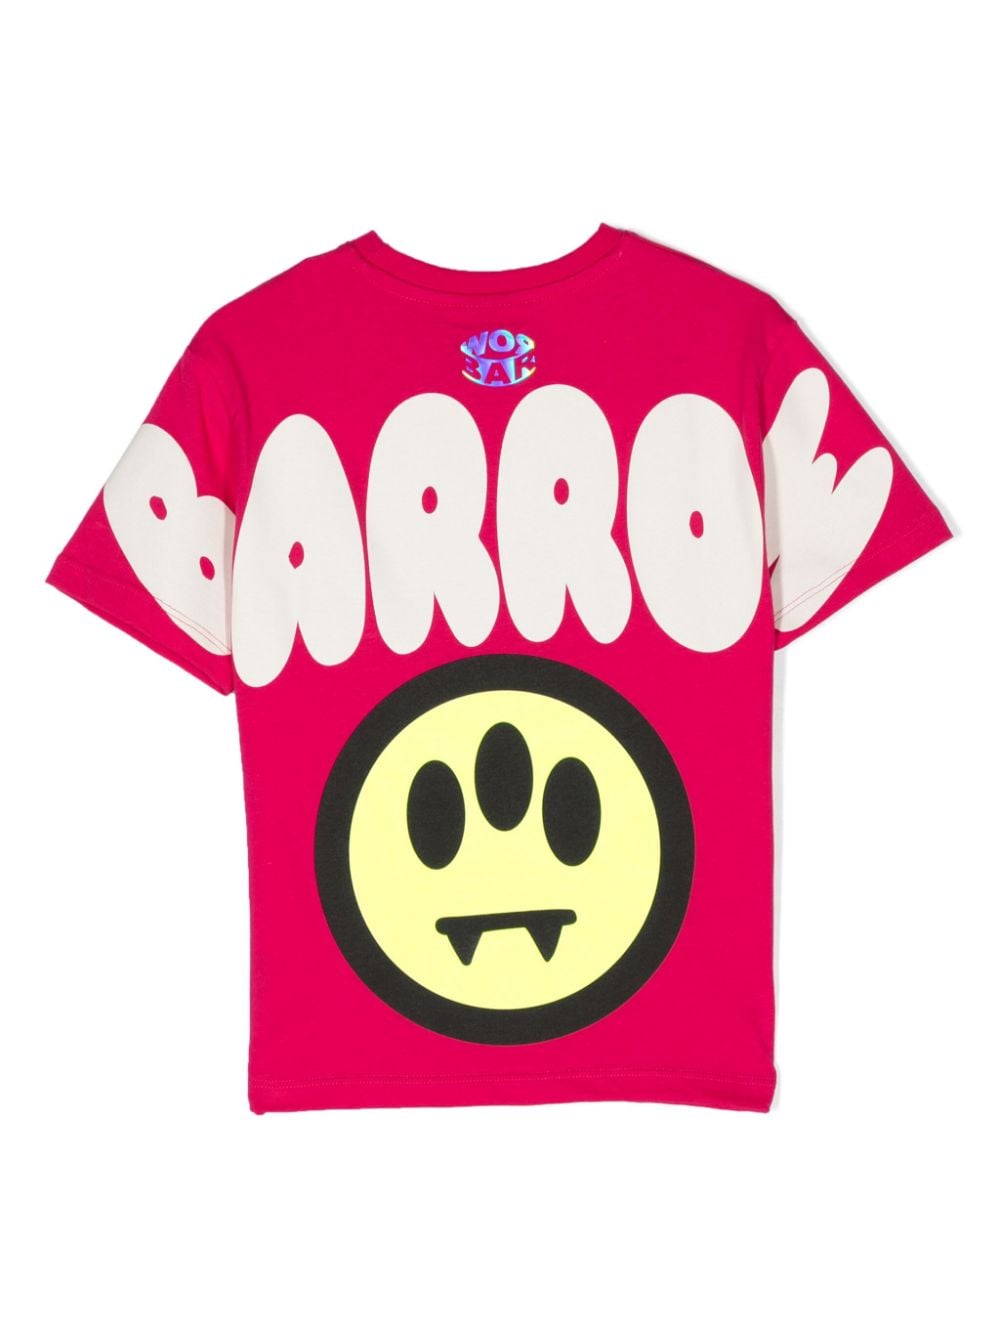 Barrow kids t-shirt con stampa